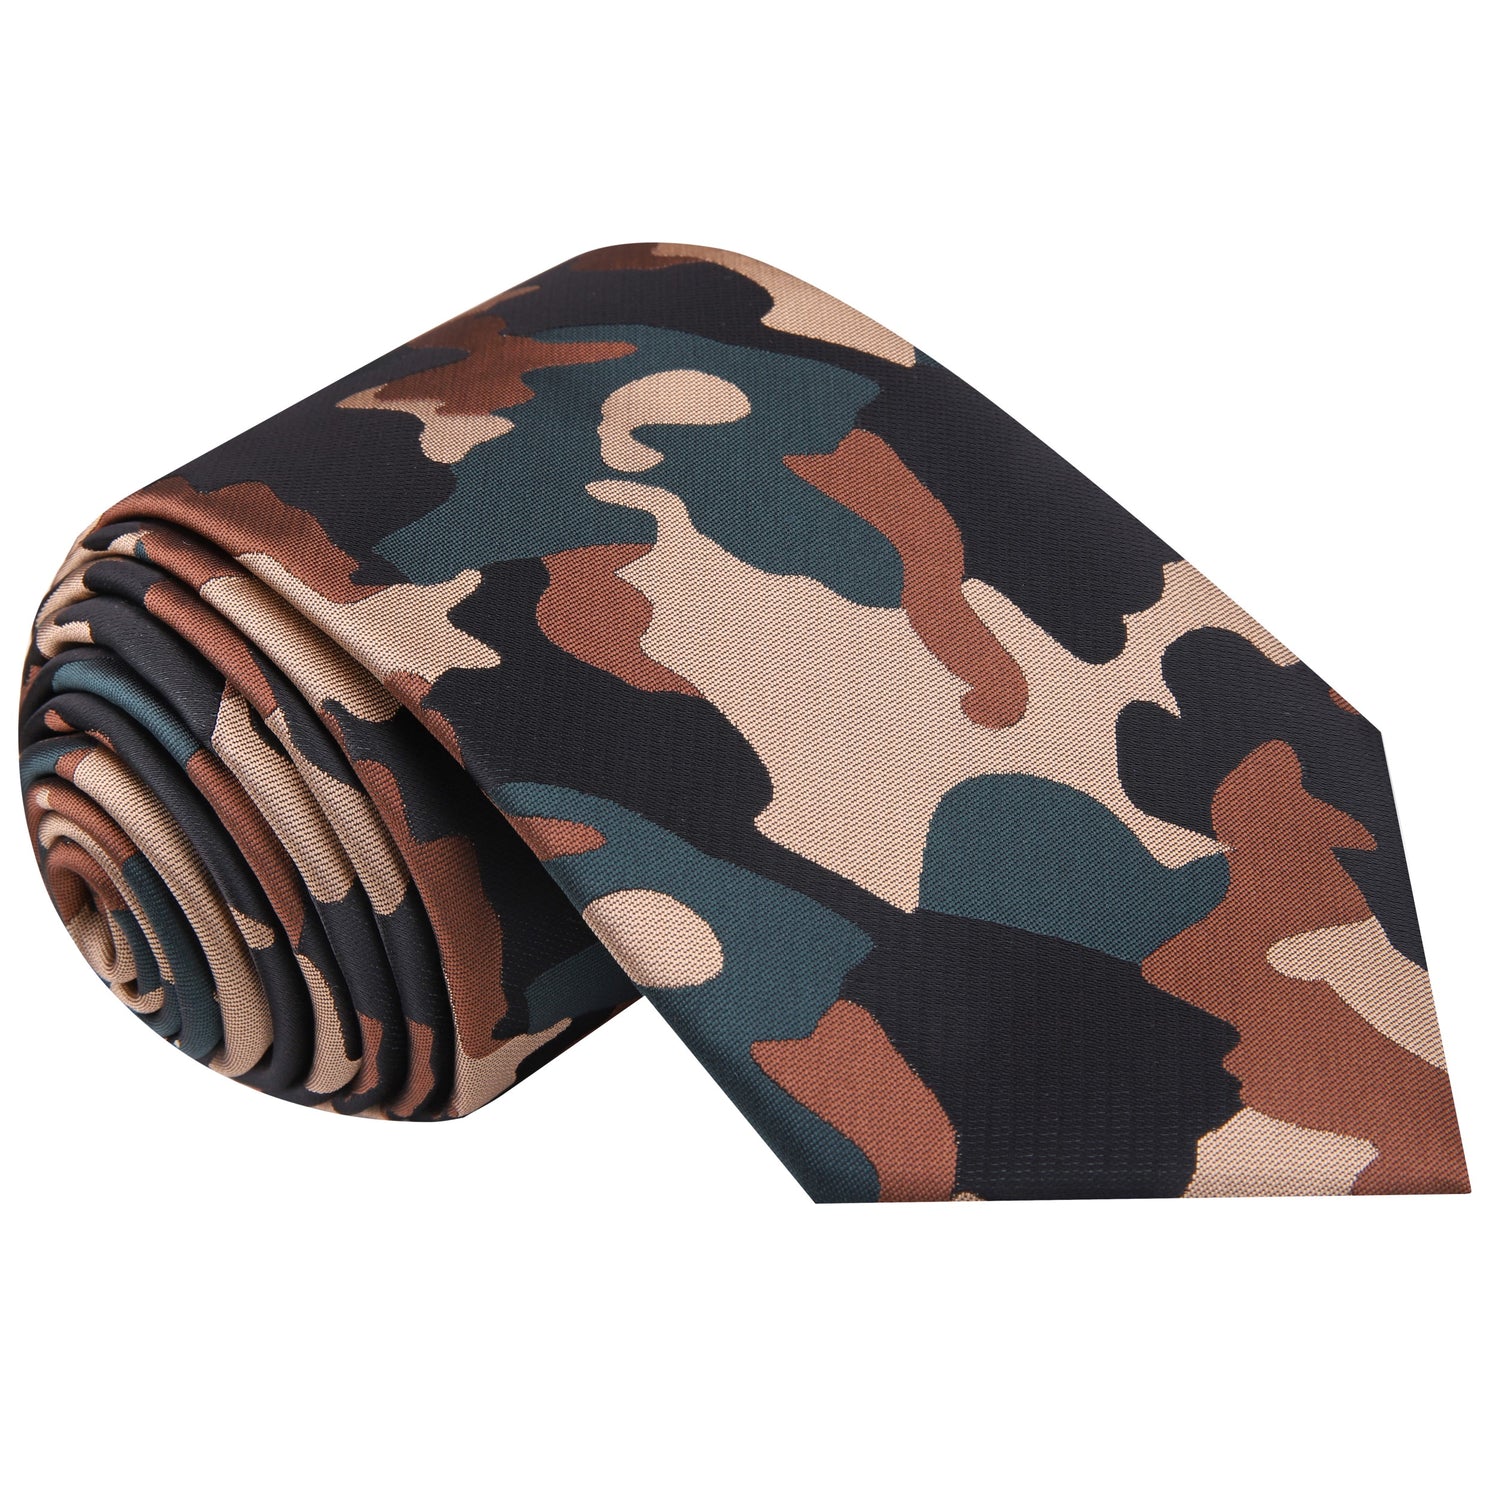 A Brown, Olive Green, Black Color Camouflage Fleck Pattern Silk Necktie 